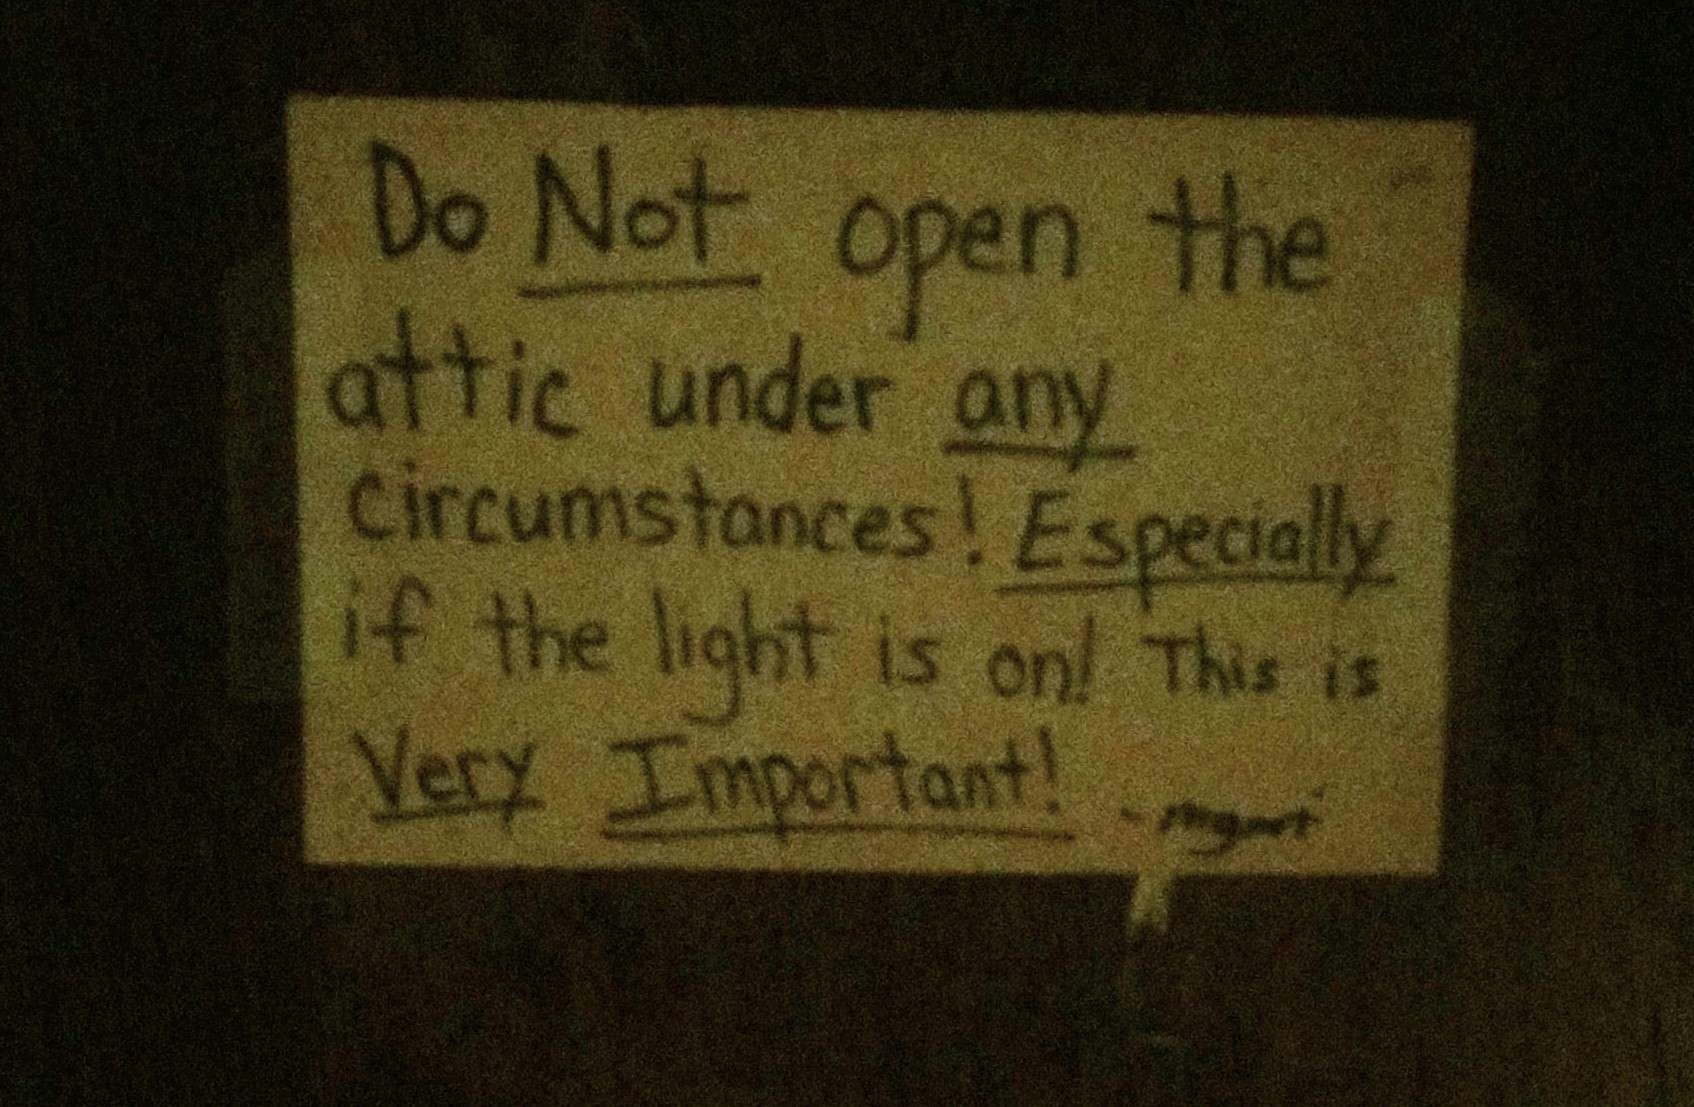 &quot;Do not open the attic...&quot;